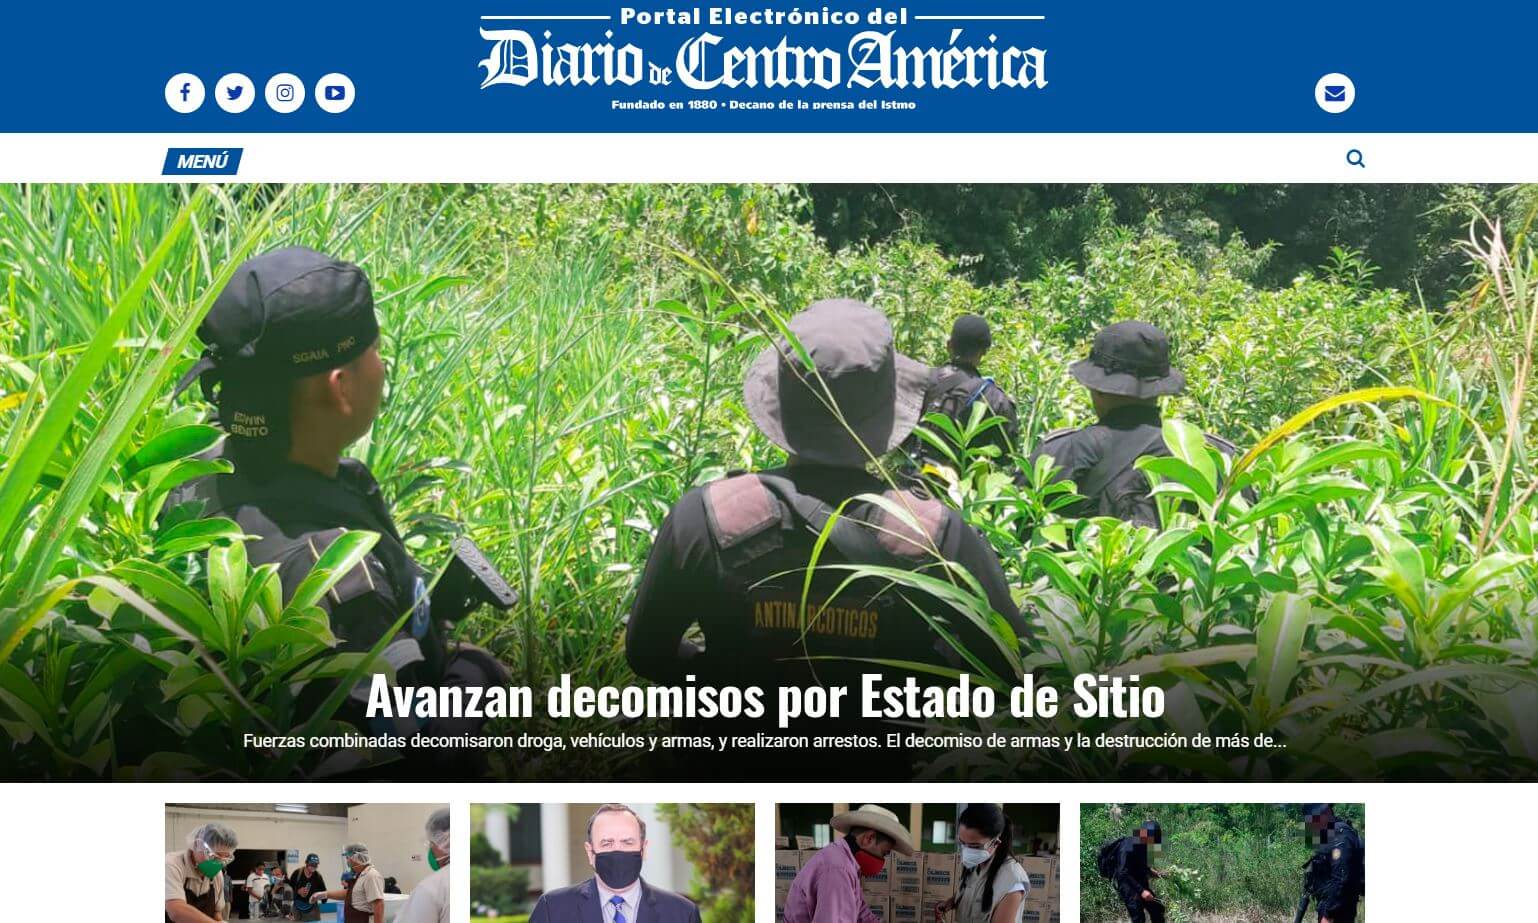 periodicos de guatemala 05 diario de centro america website